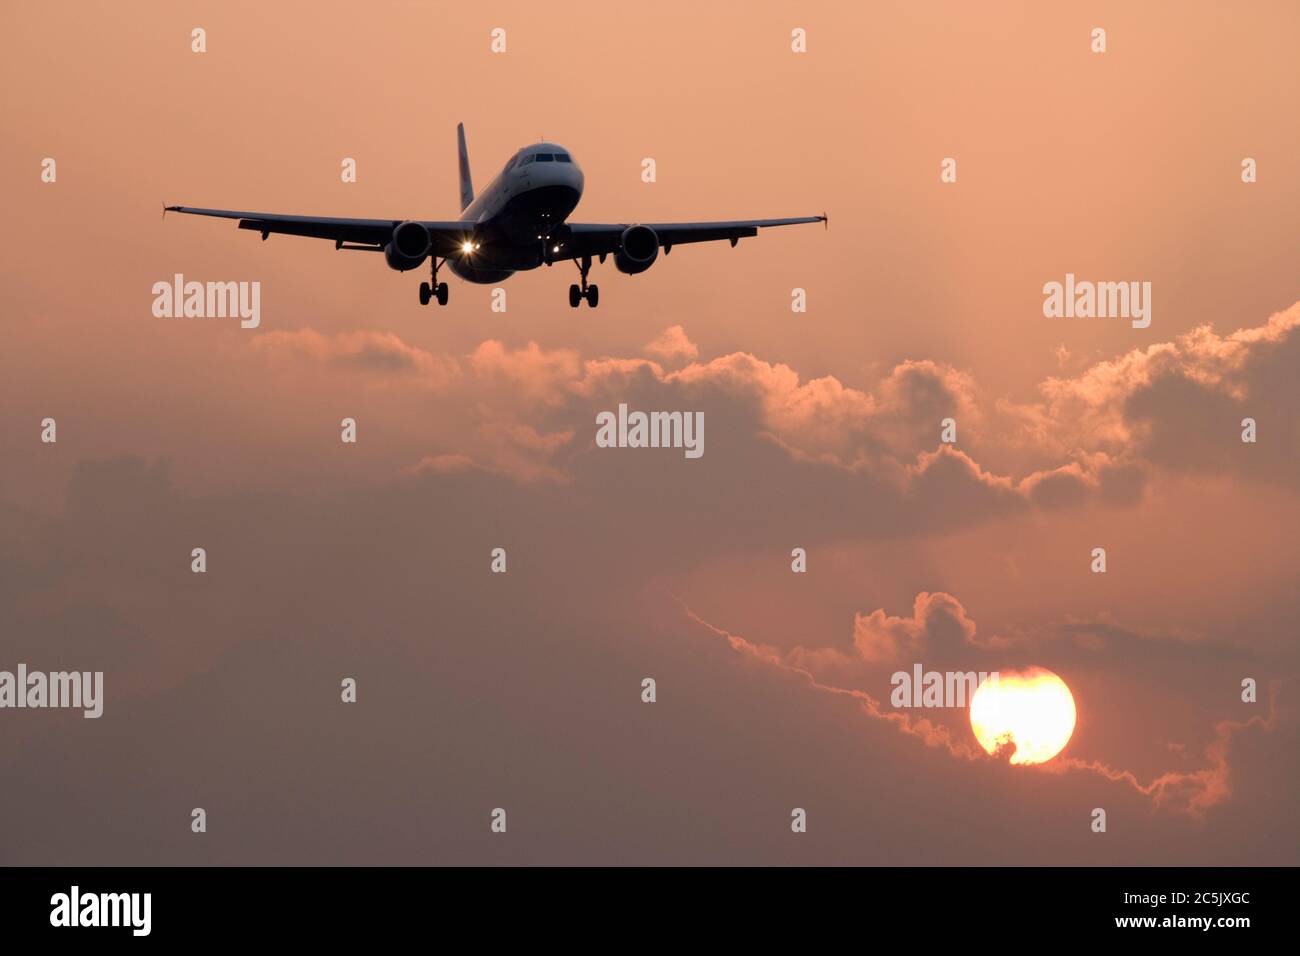 Aeroplane coming in to land. UK. Stock Photo